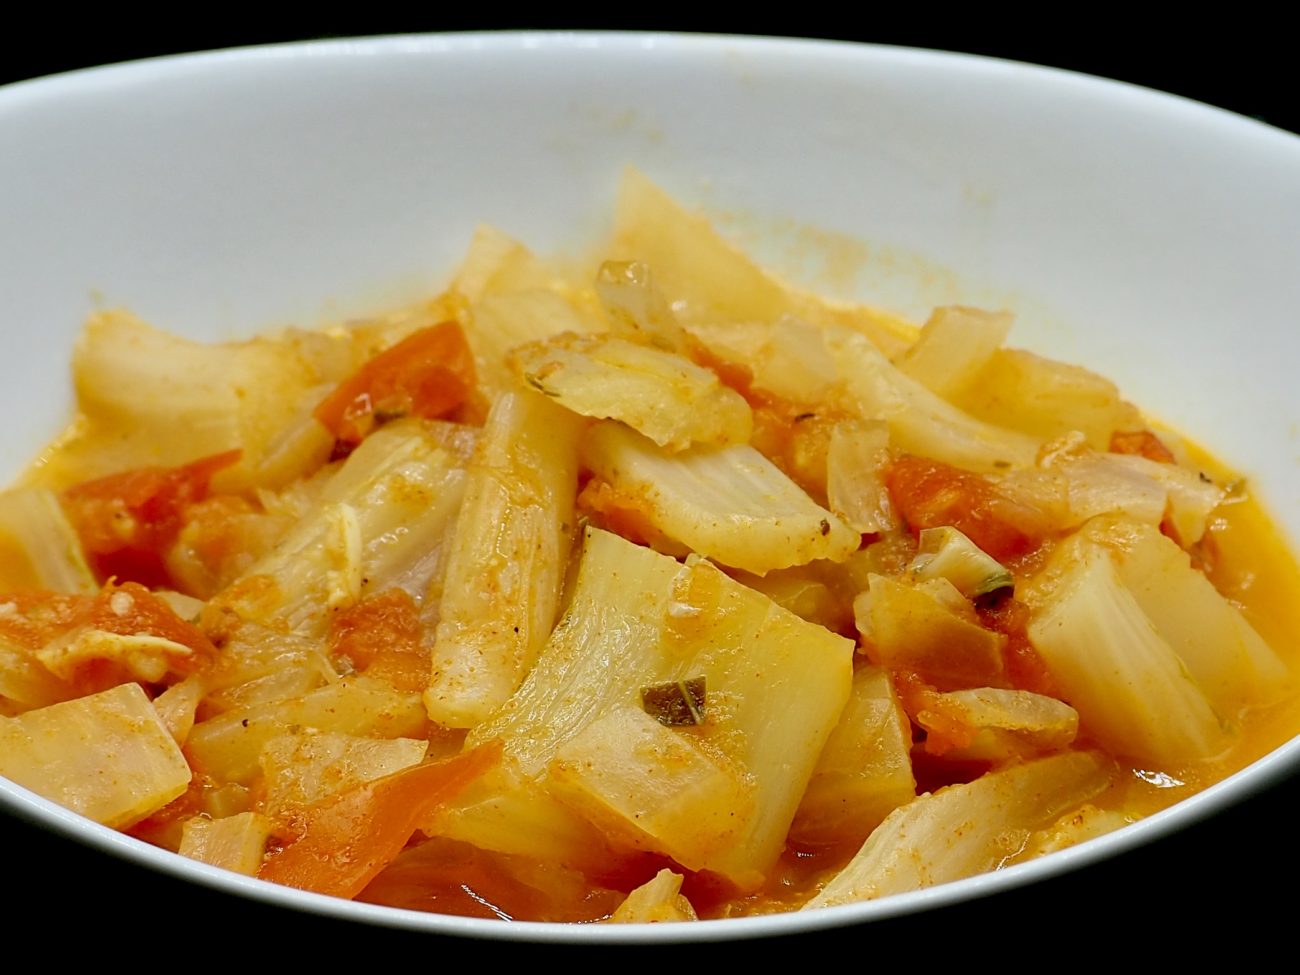 Blettes à la tomate – Swiss Chard Stalks and Tomato Stew